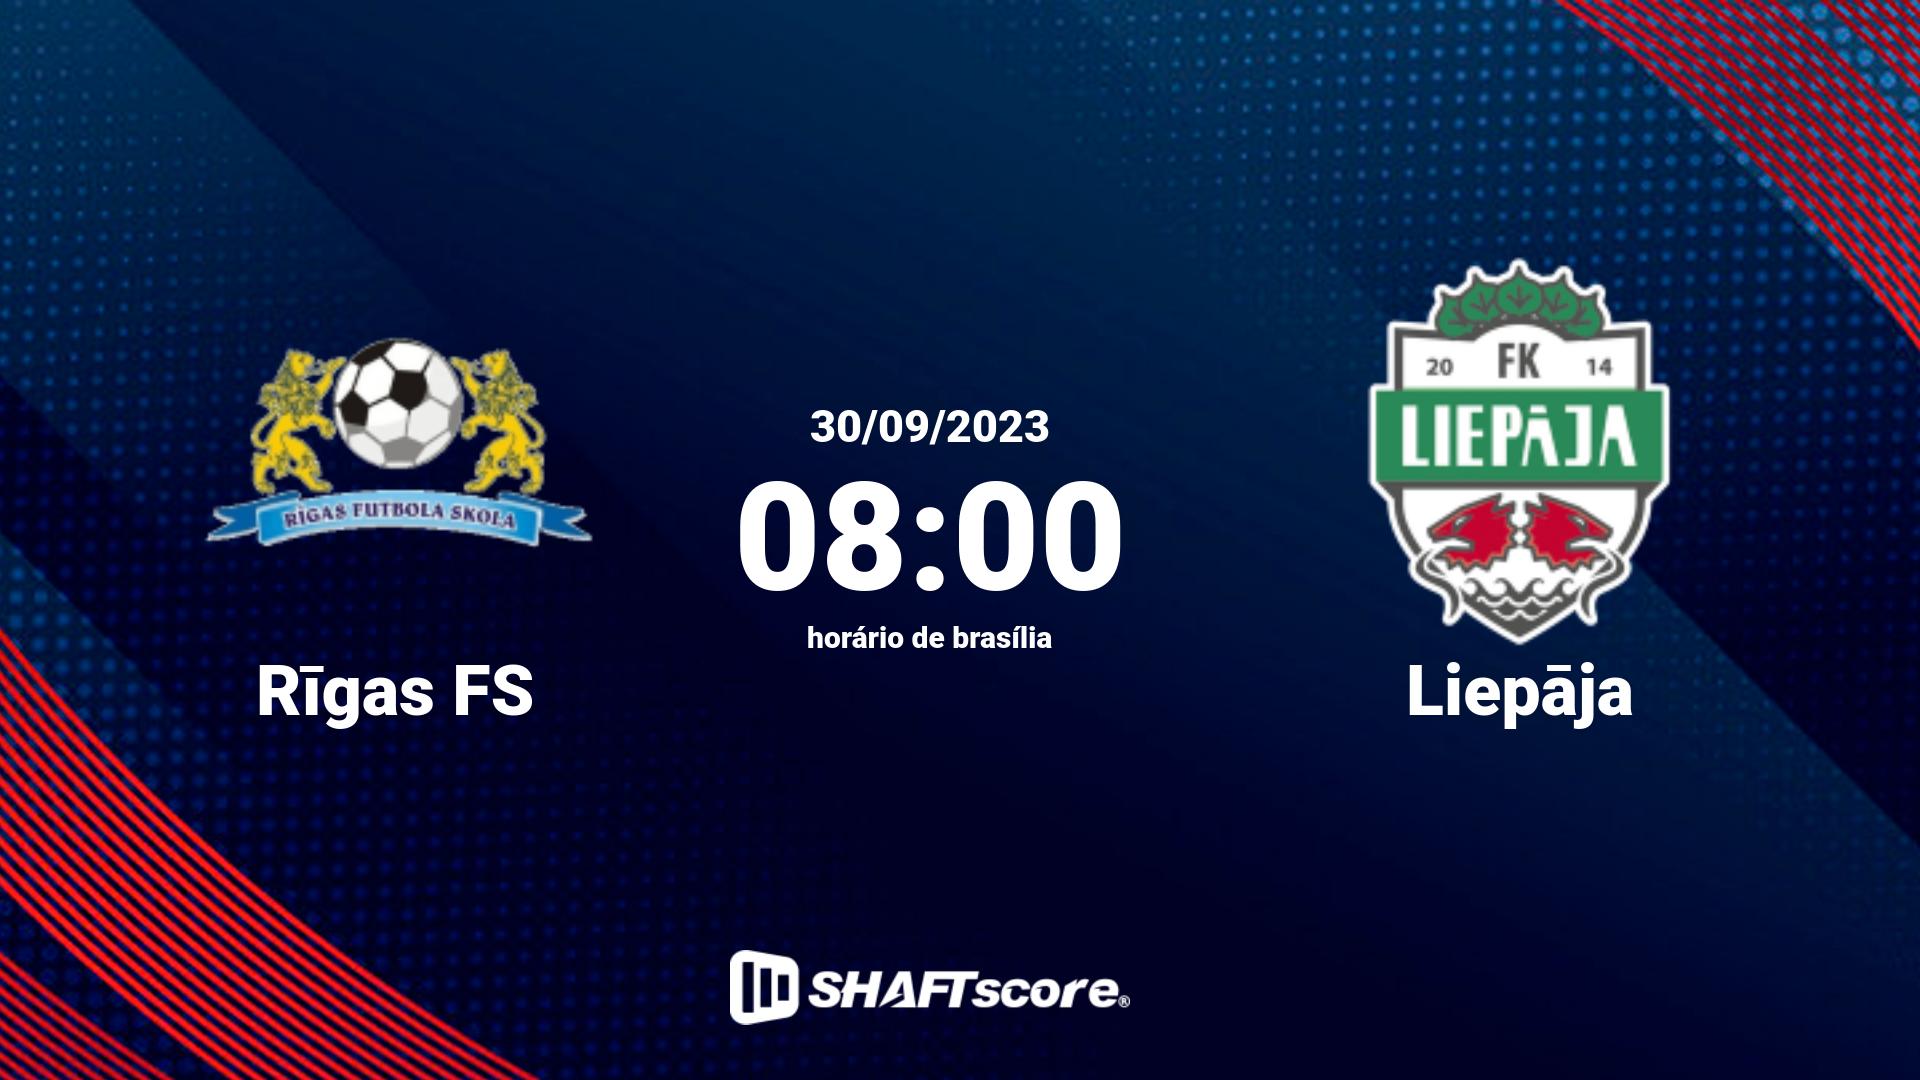 Estatísticas do jogo Rīgas FS vs Liepāja 30.09 08:00